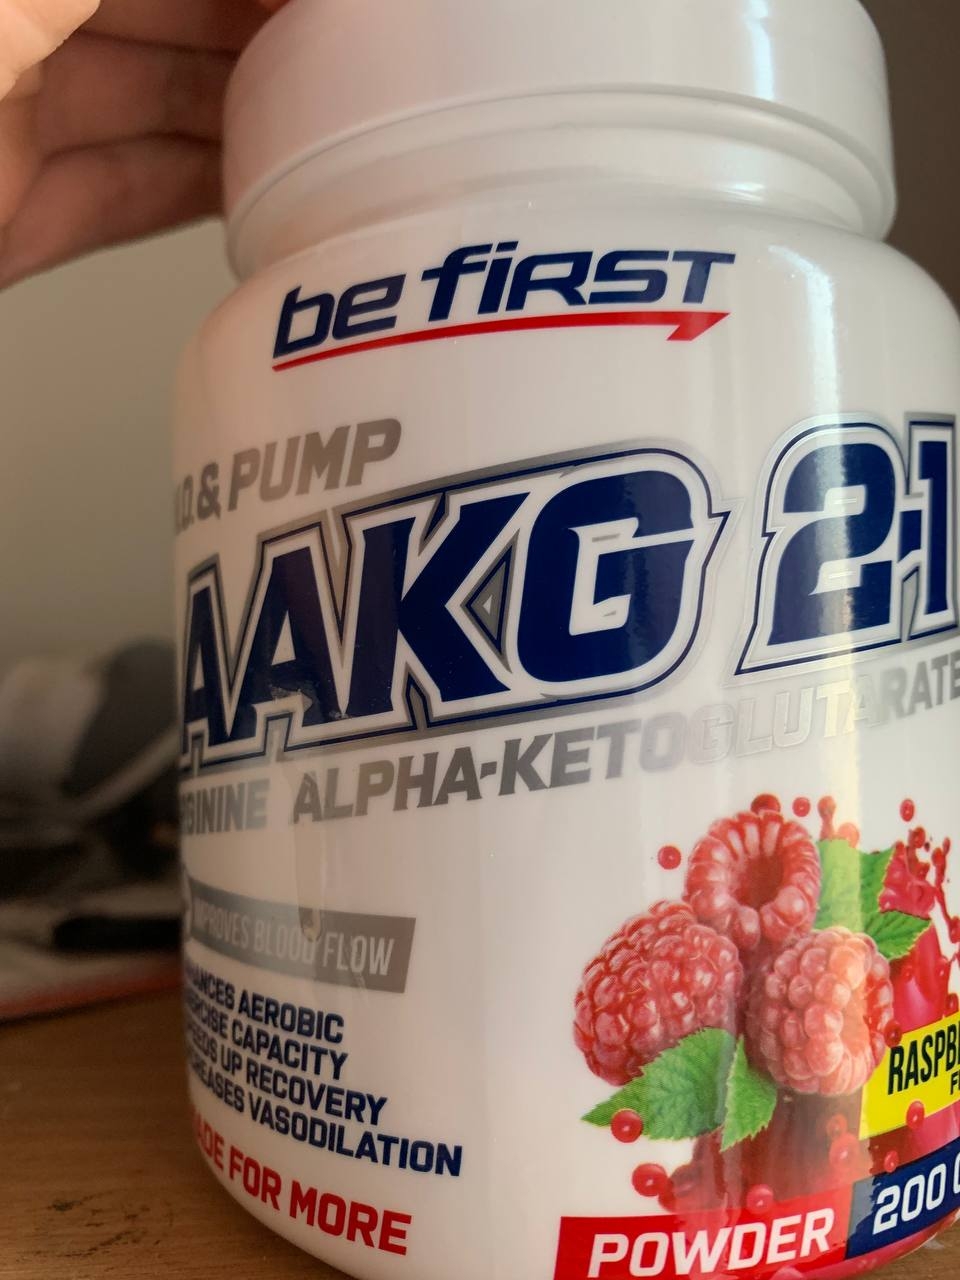 Be first AAKG 2:1 Powder (Arginine AKG) - Мой любимый вид аргинина